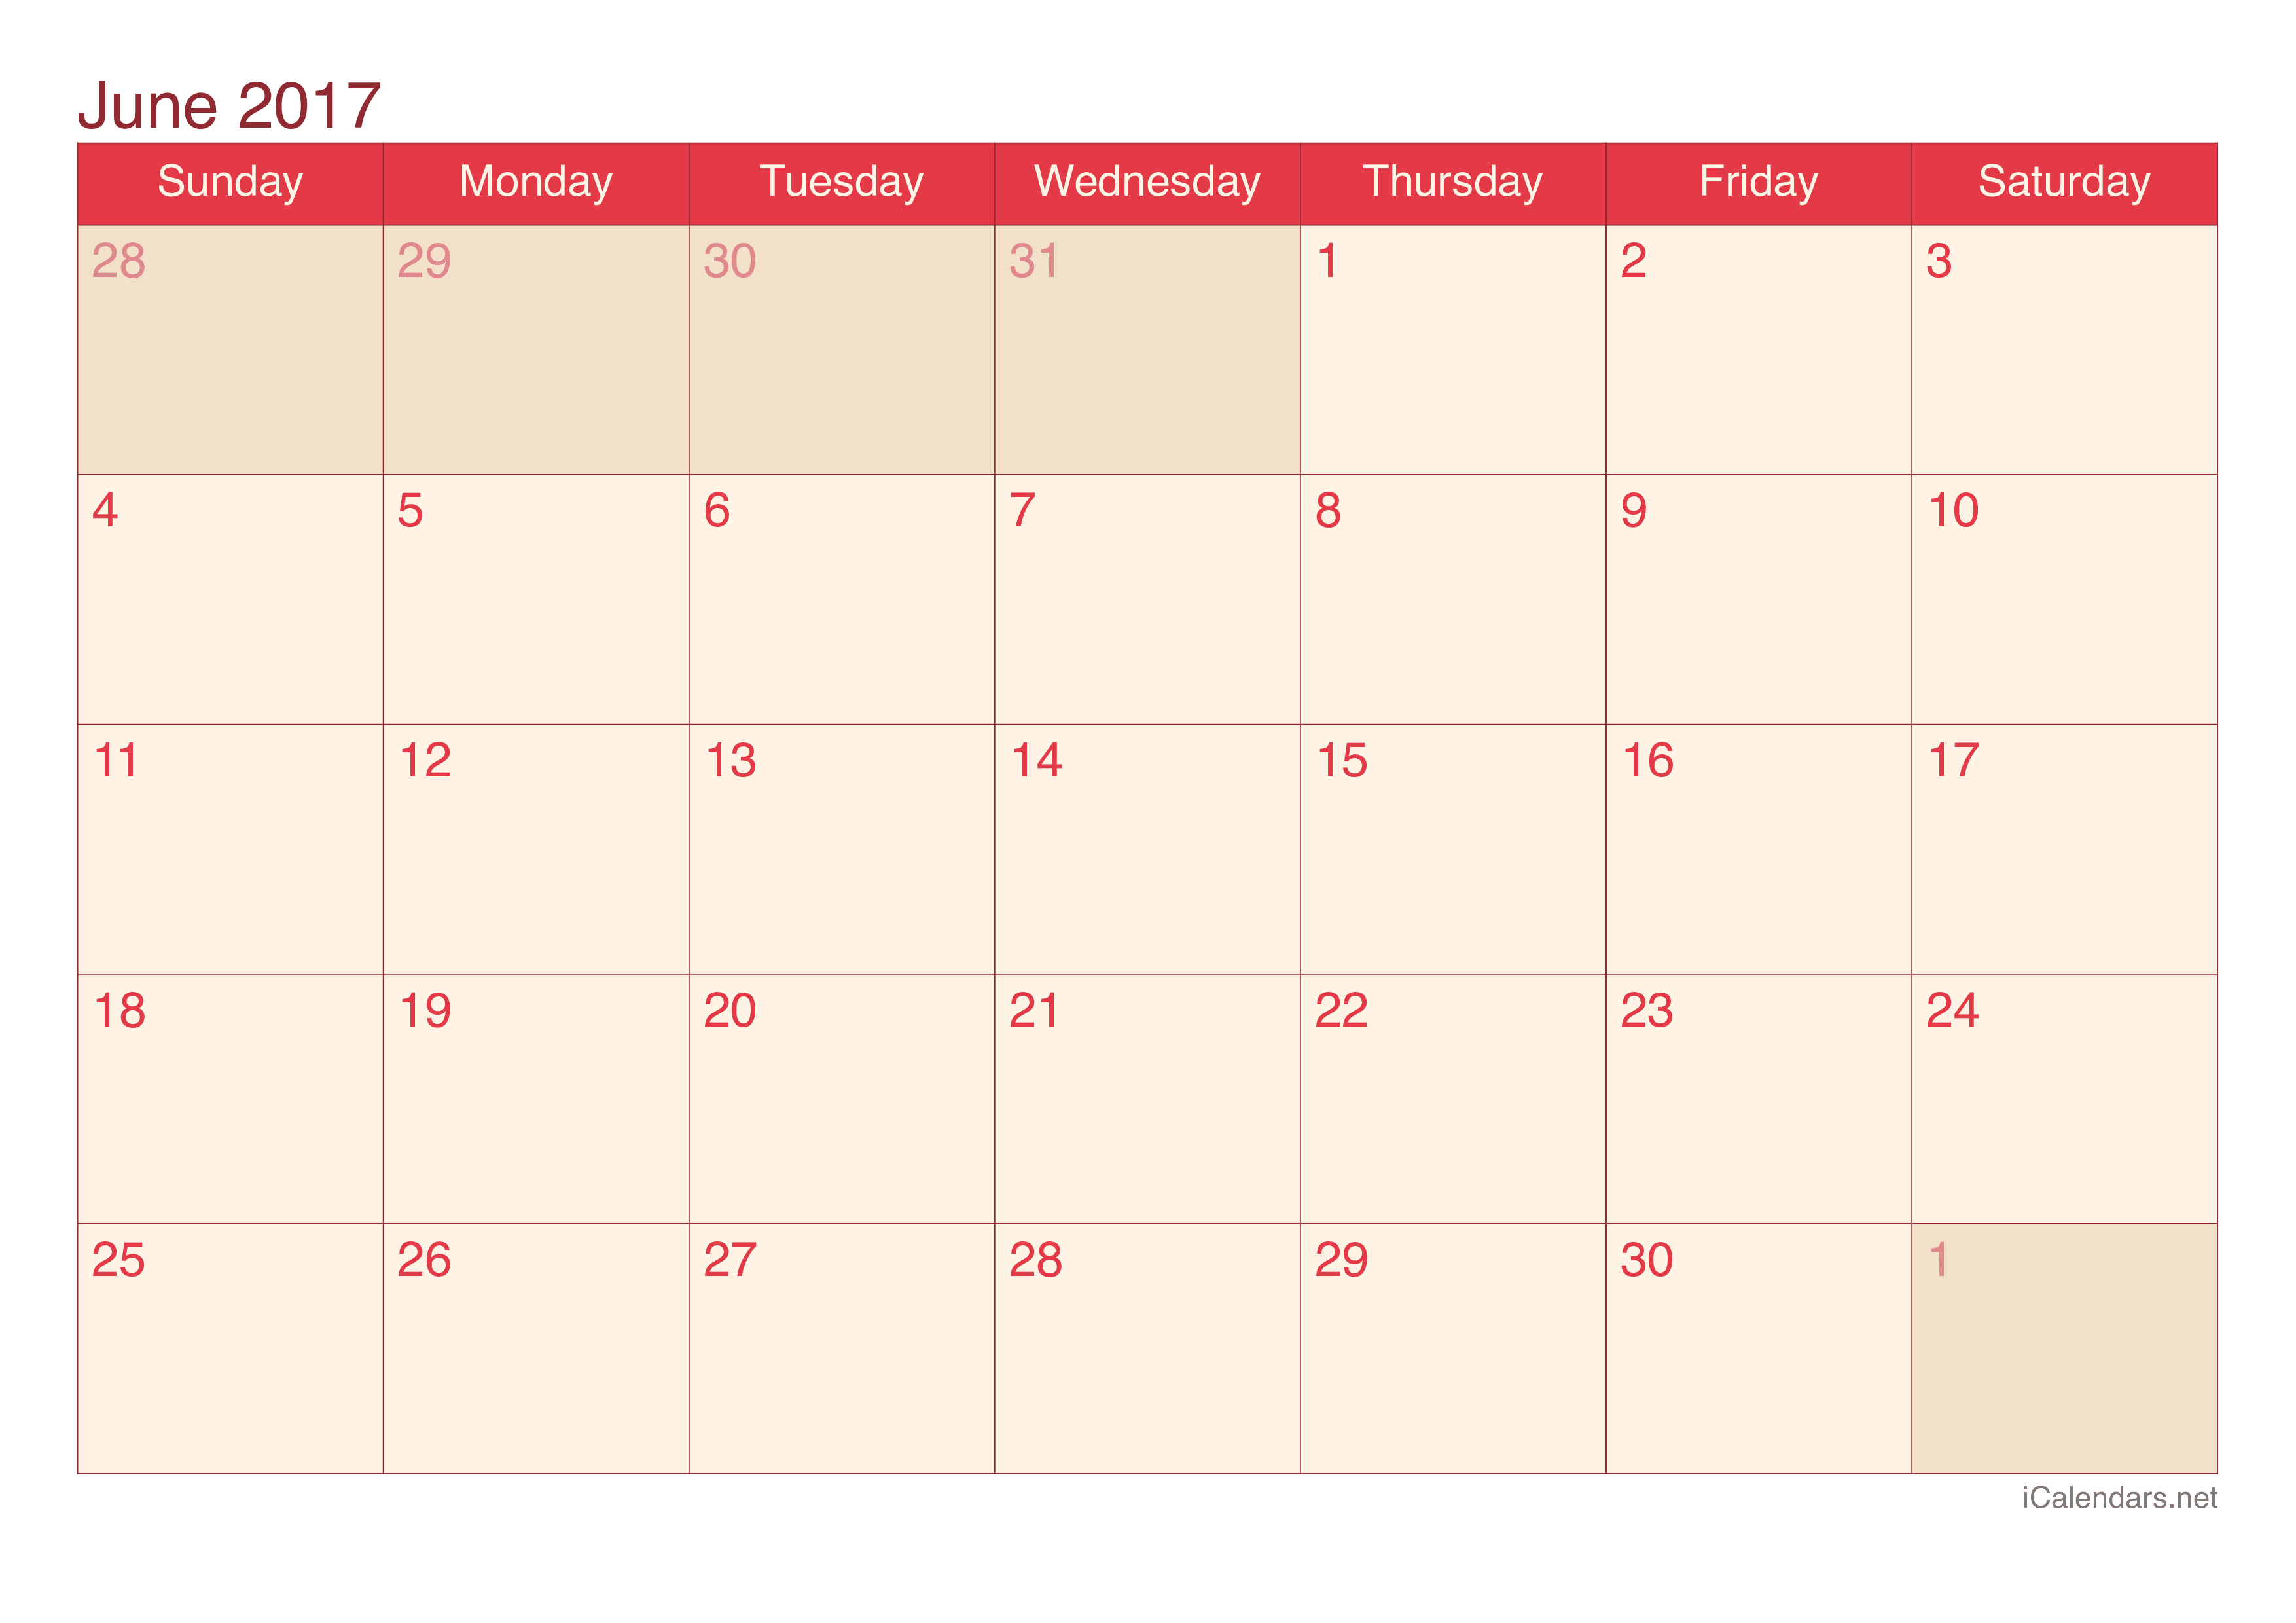 June 2017 Printable Calendar icalendars net